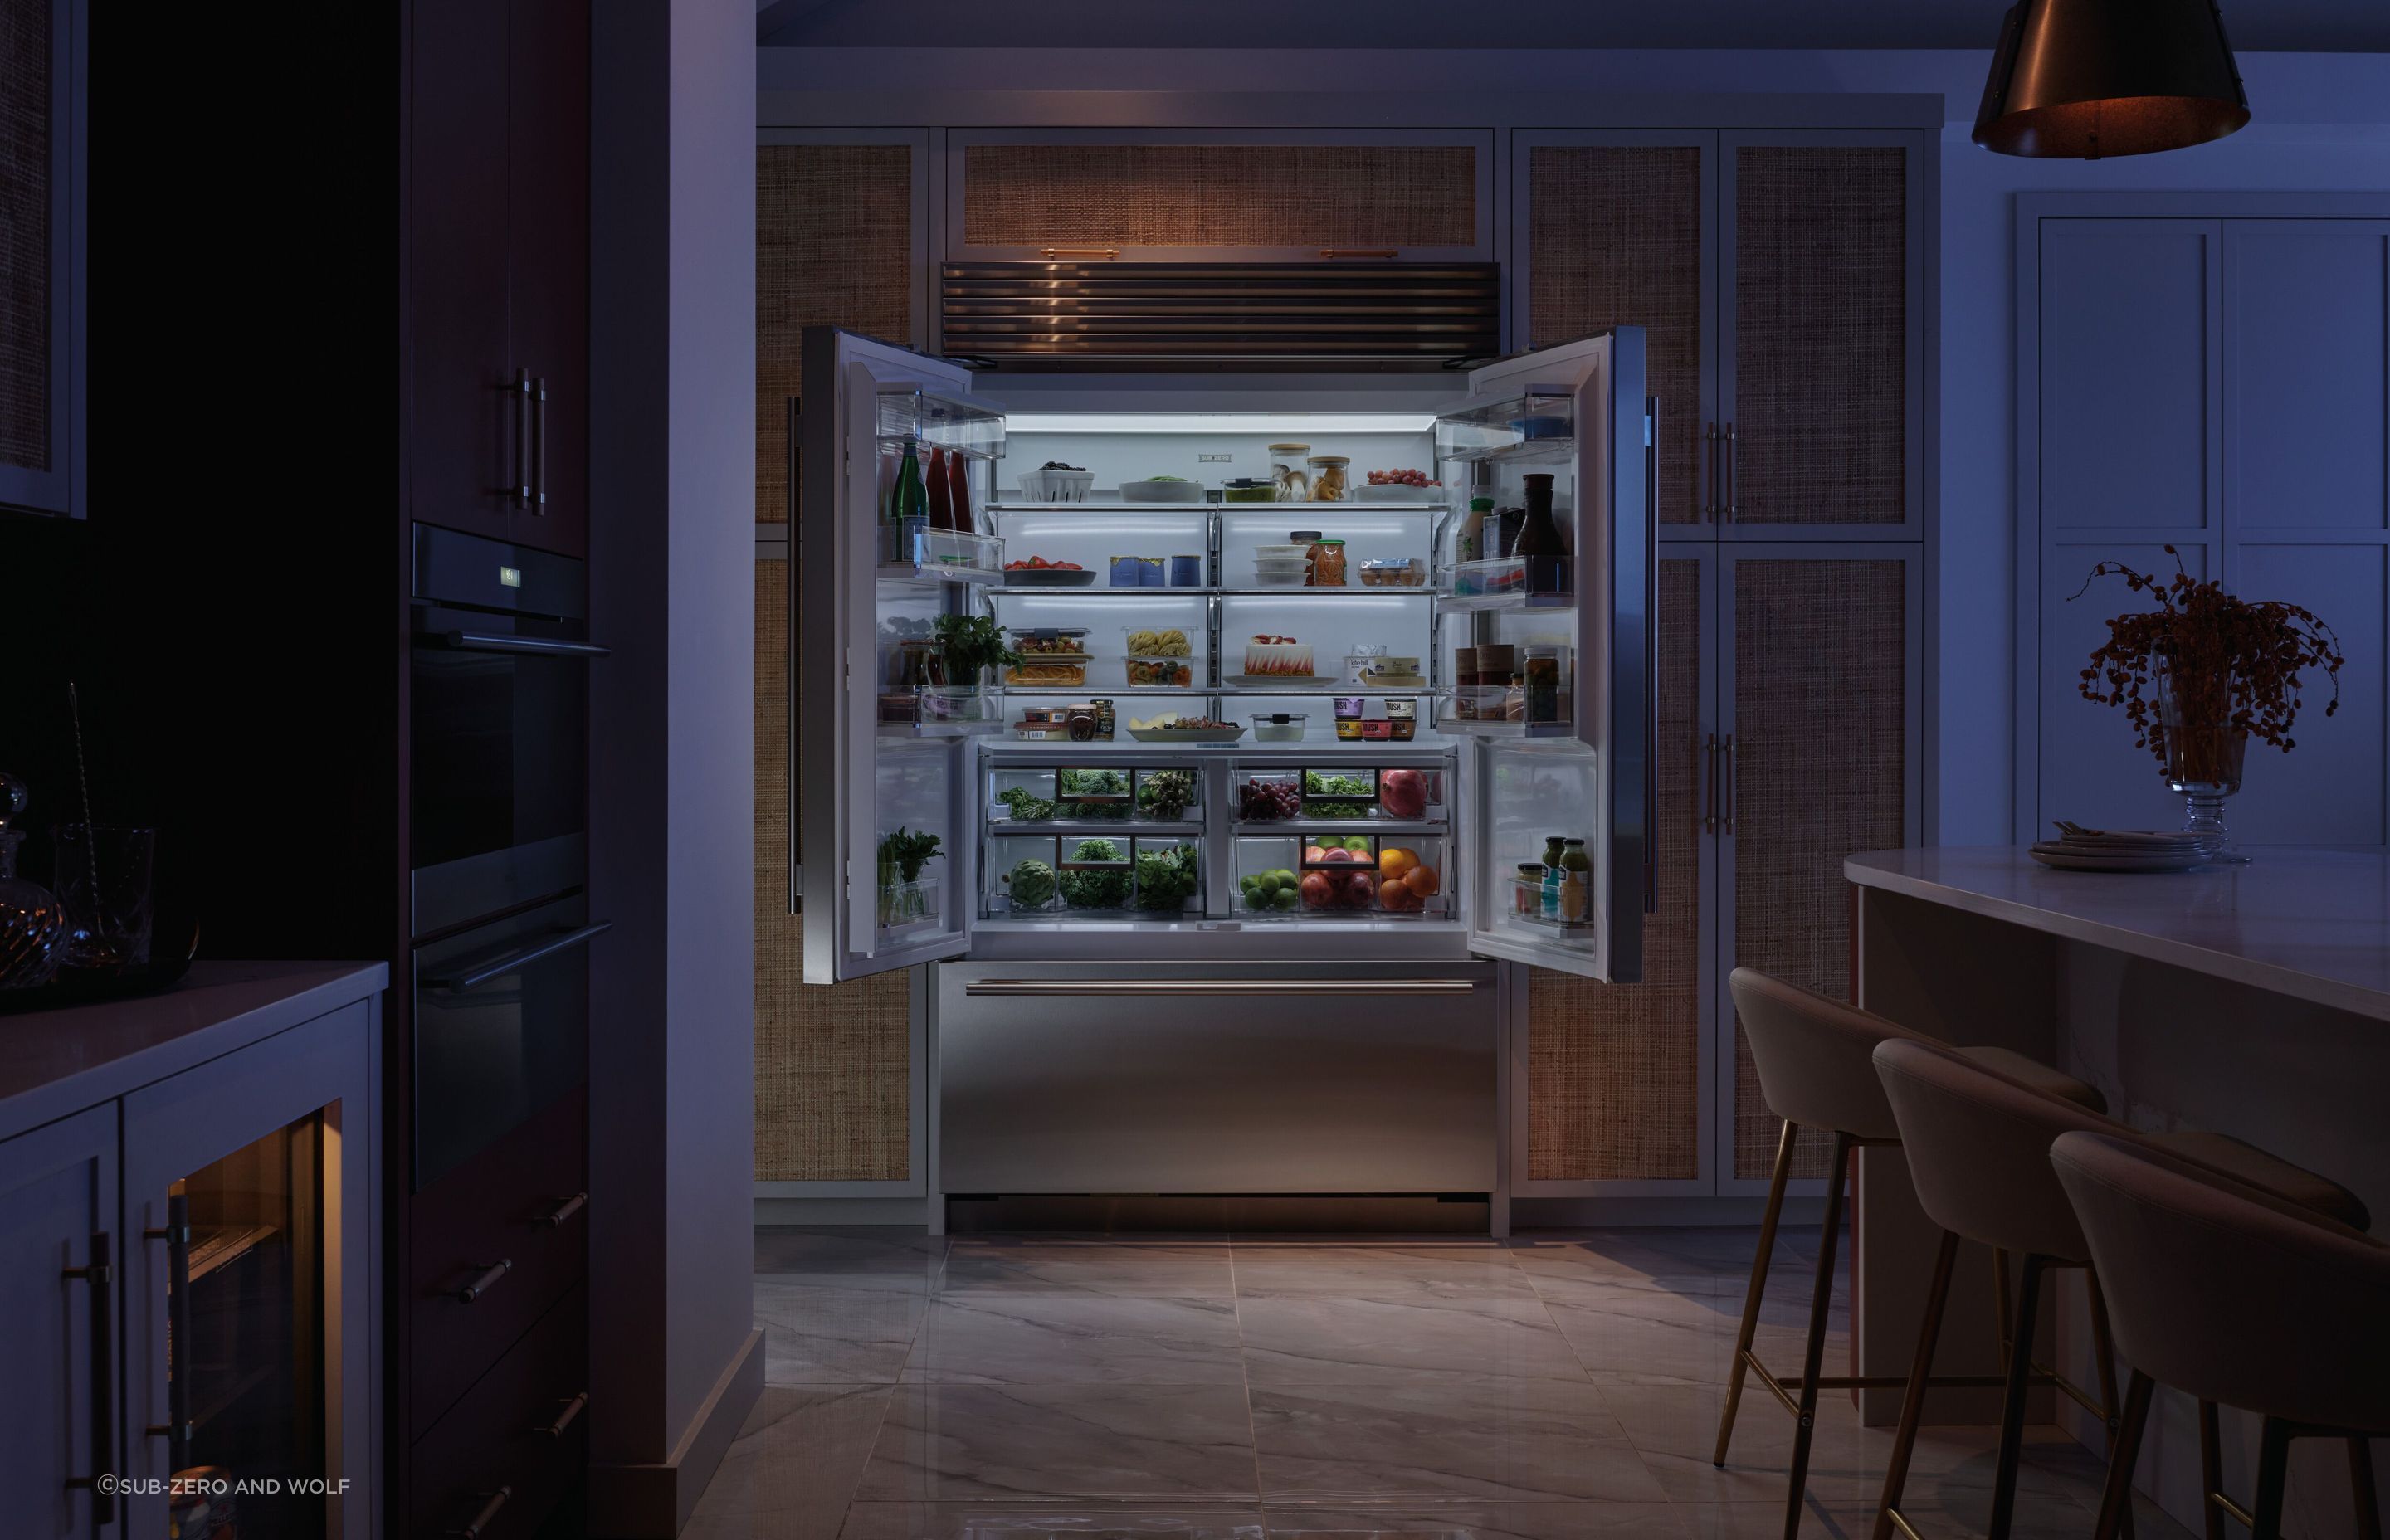 Sub-Zero &amp; Wolf’s features individual shelf illumination within fridge interiors and innovative cleaning nanotechnology.